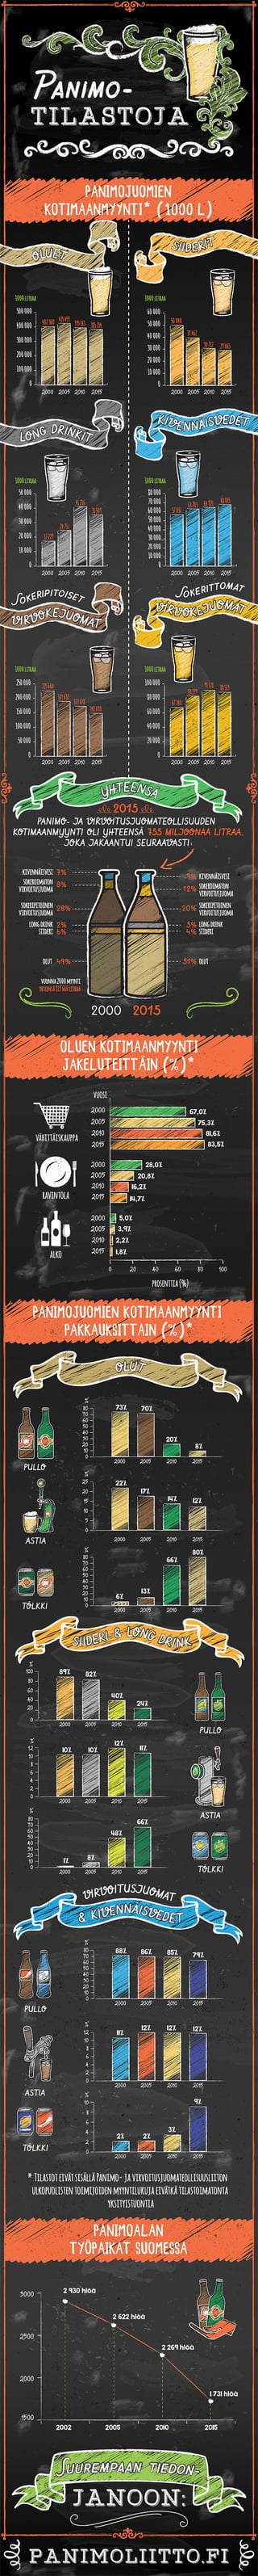 Panimon tilastoja Infograafi by DigiPeople Studio